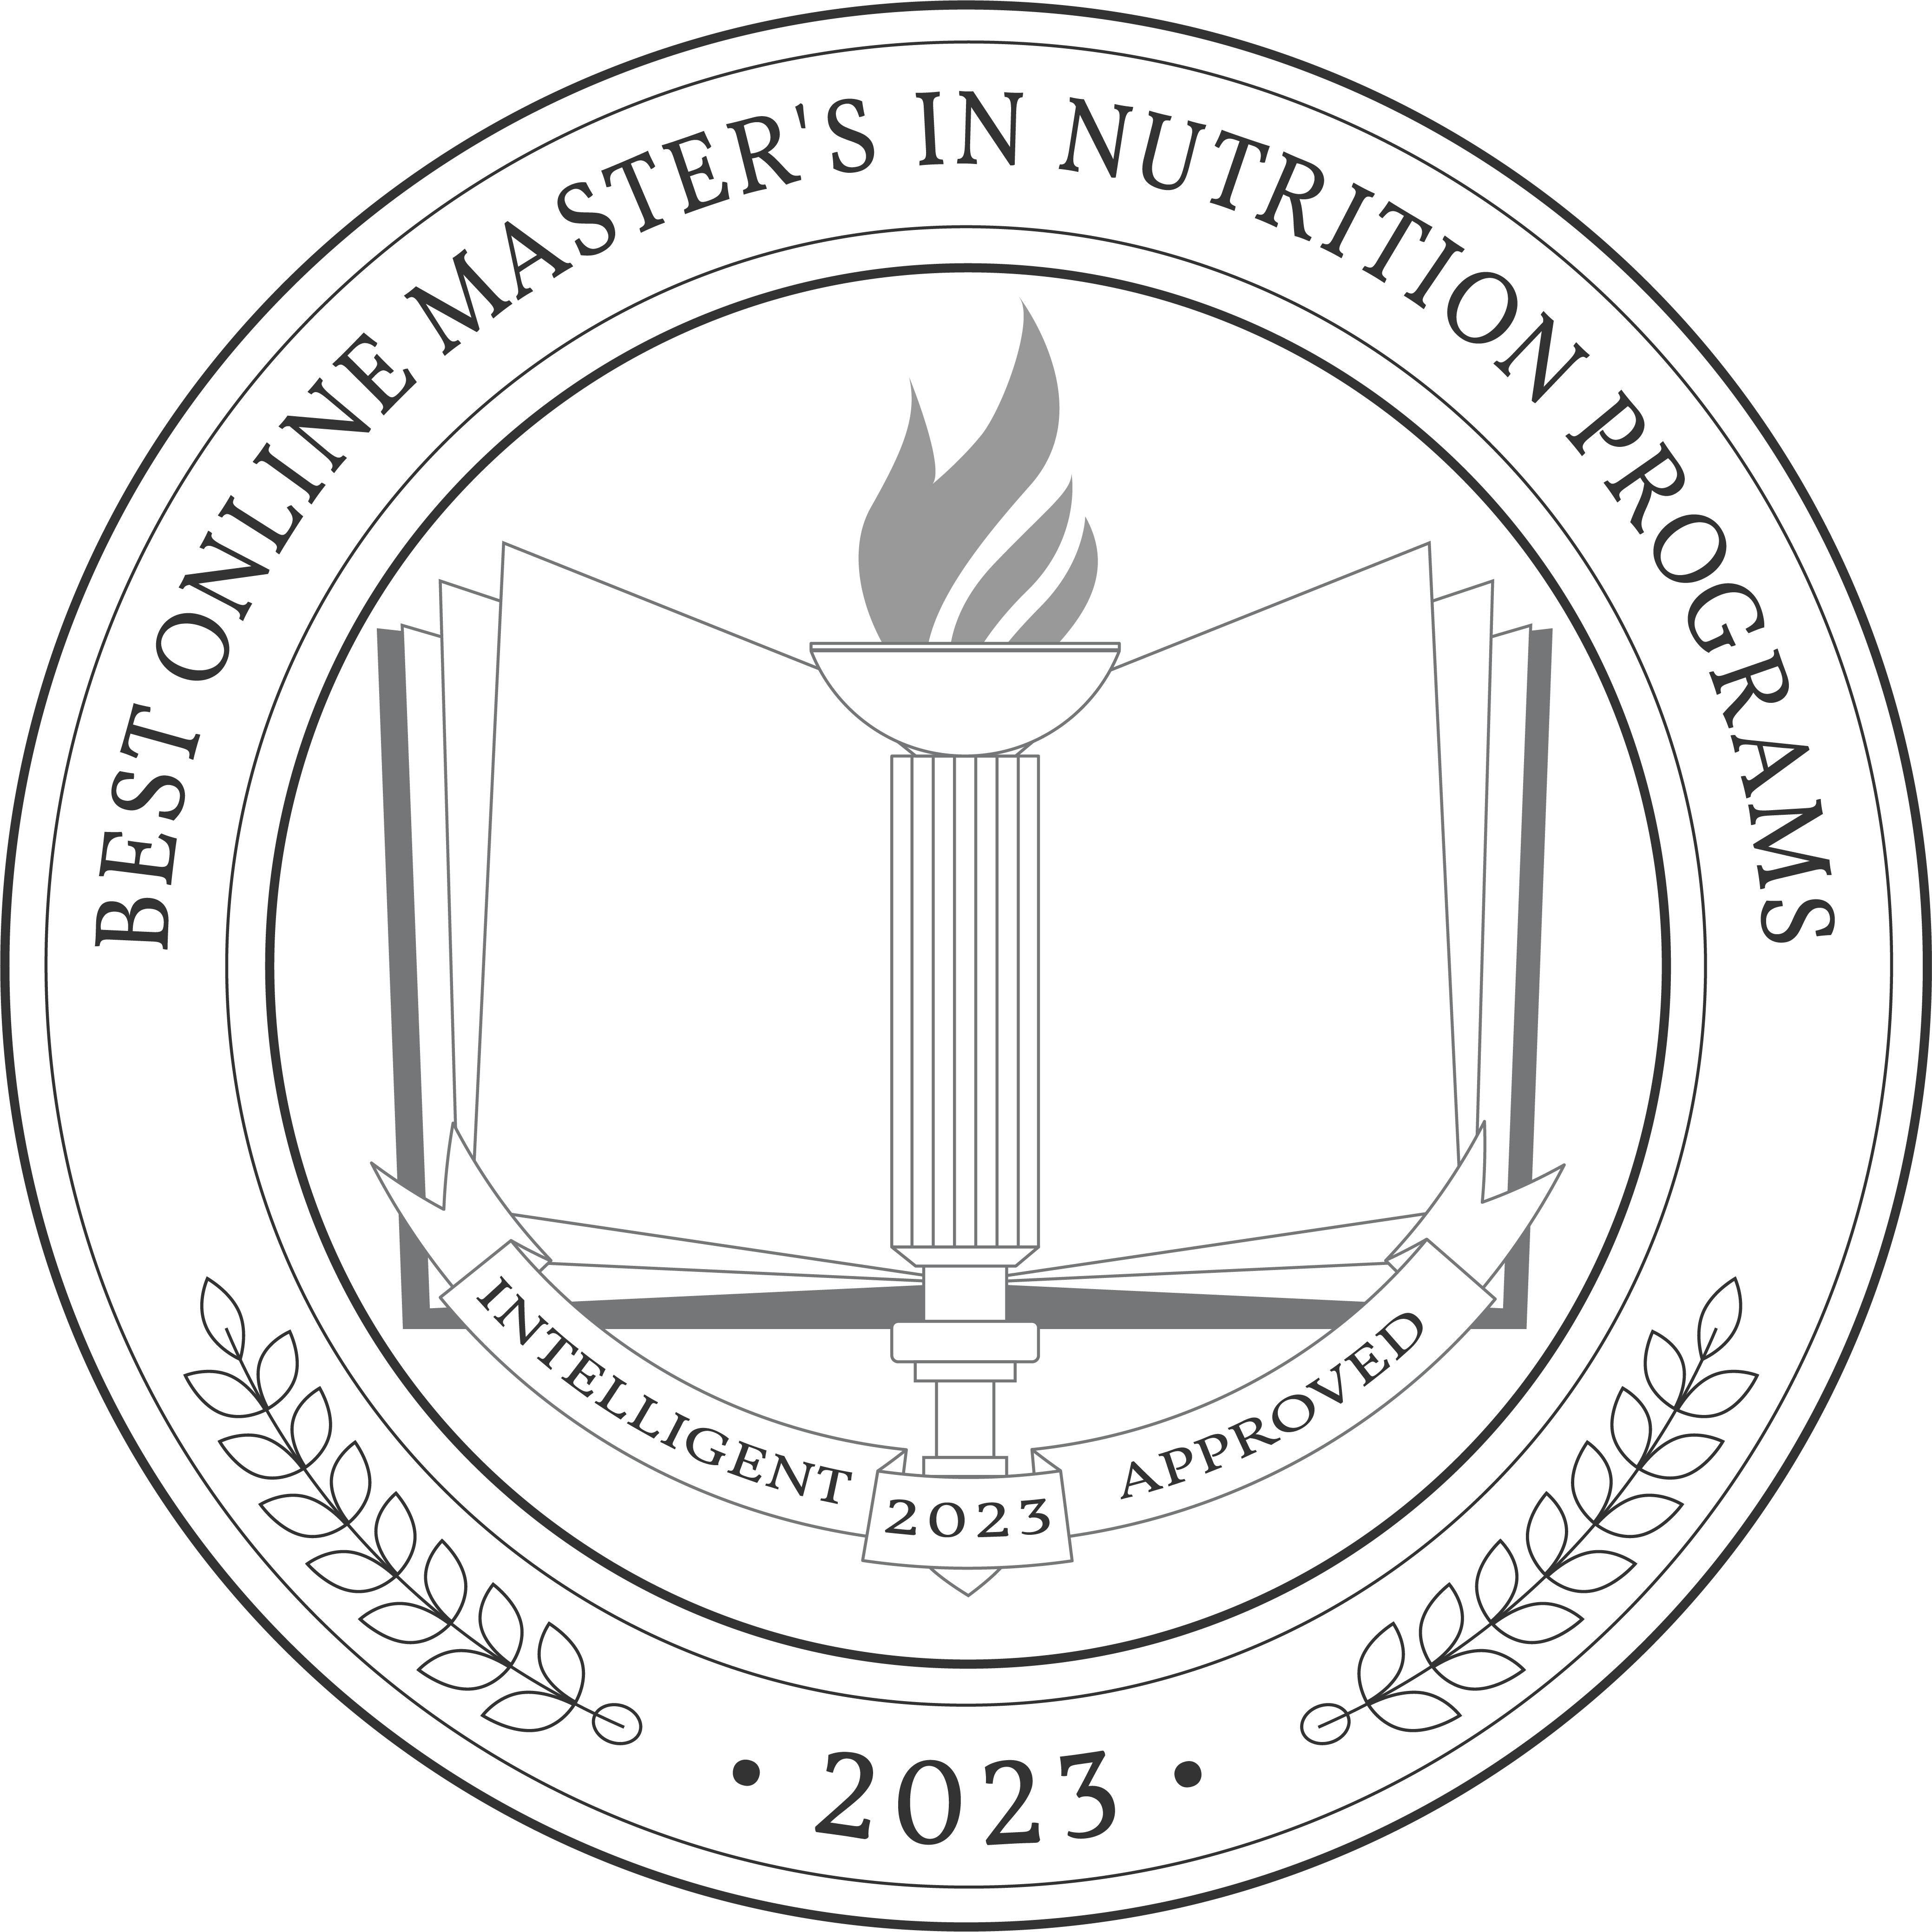 Best Online Master's in Nutrition Degree Programs